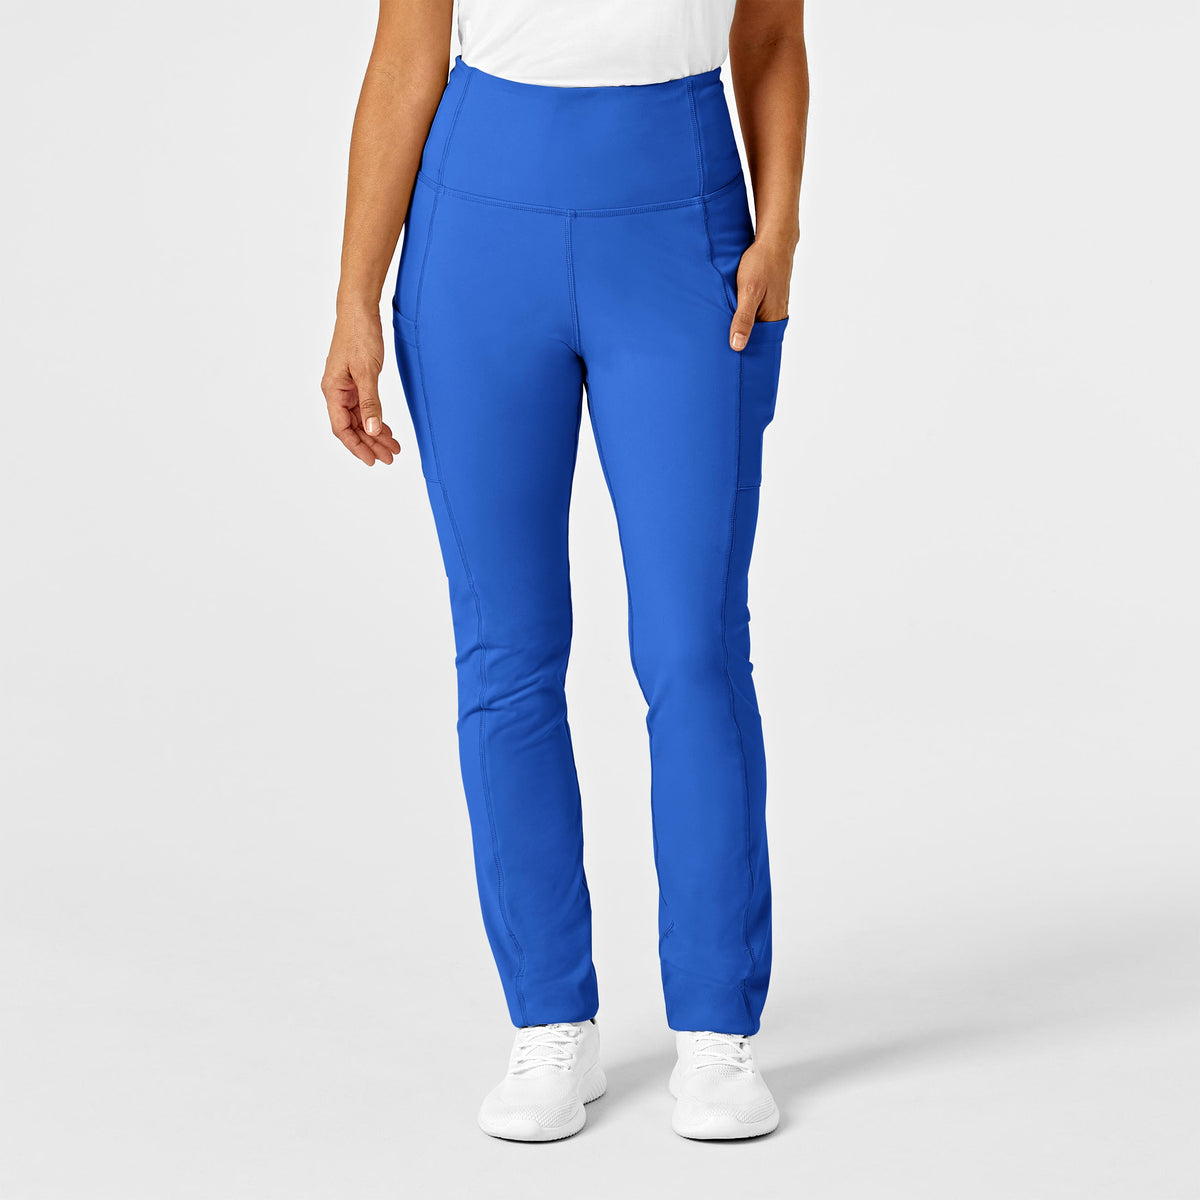 Galaxy Blue Yoga Waistband Women's Jogger Scrub Pants 8520P - The